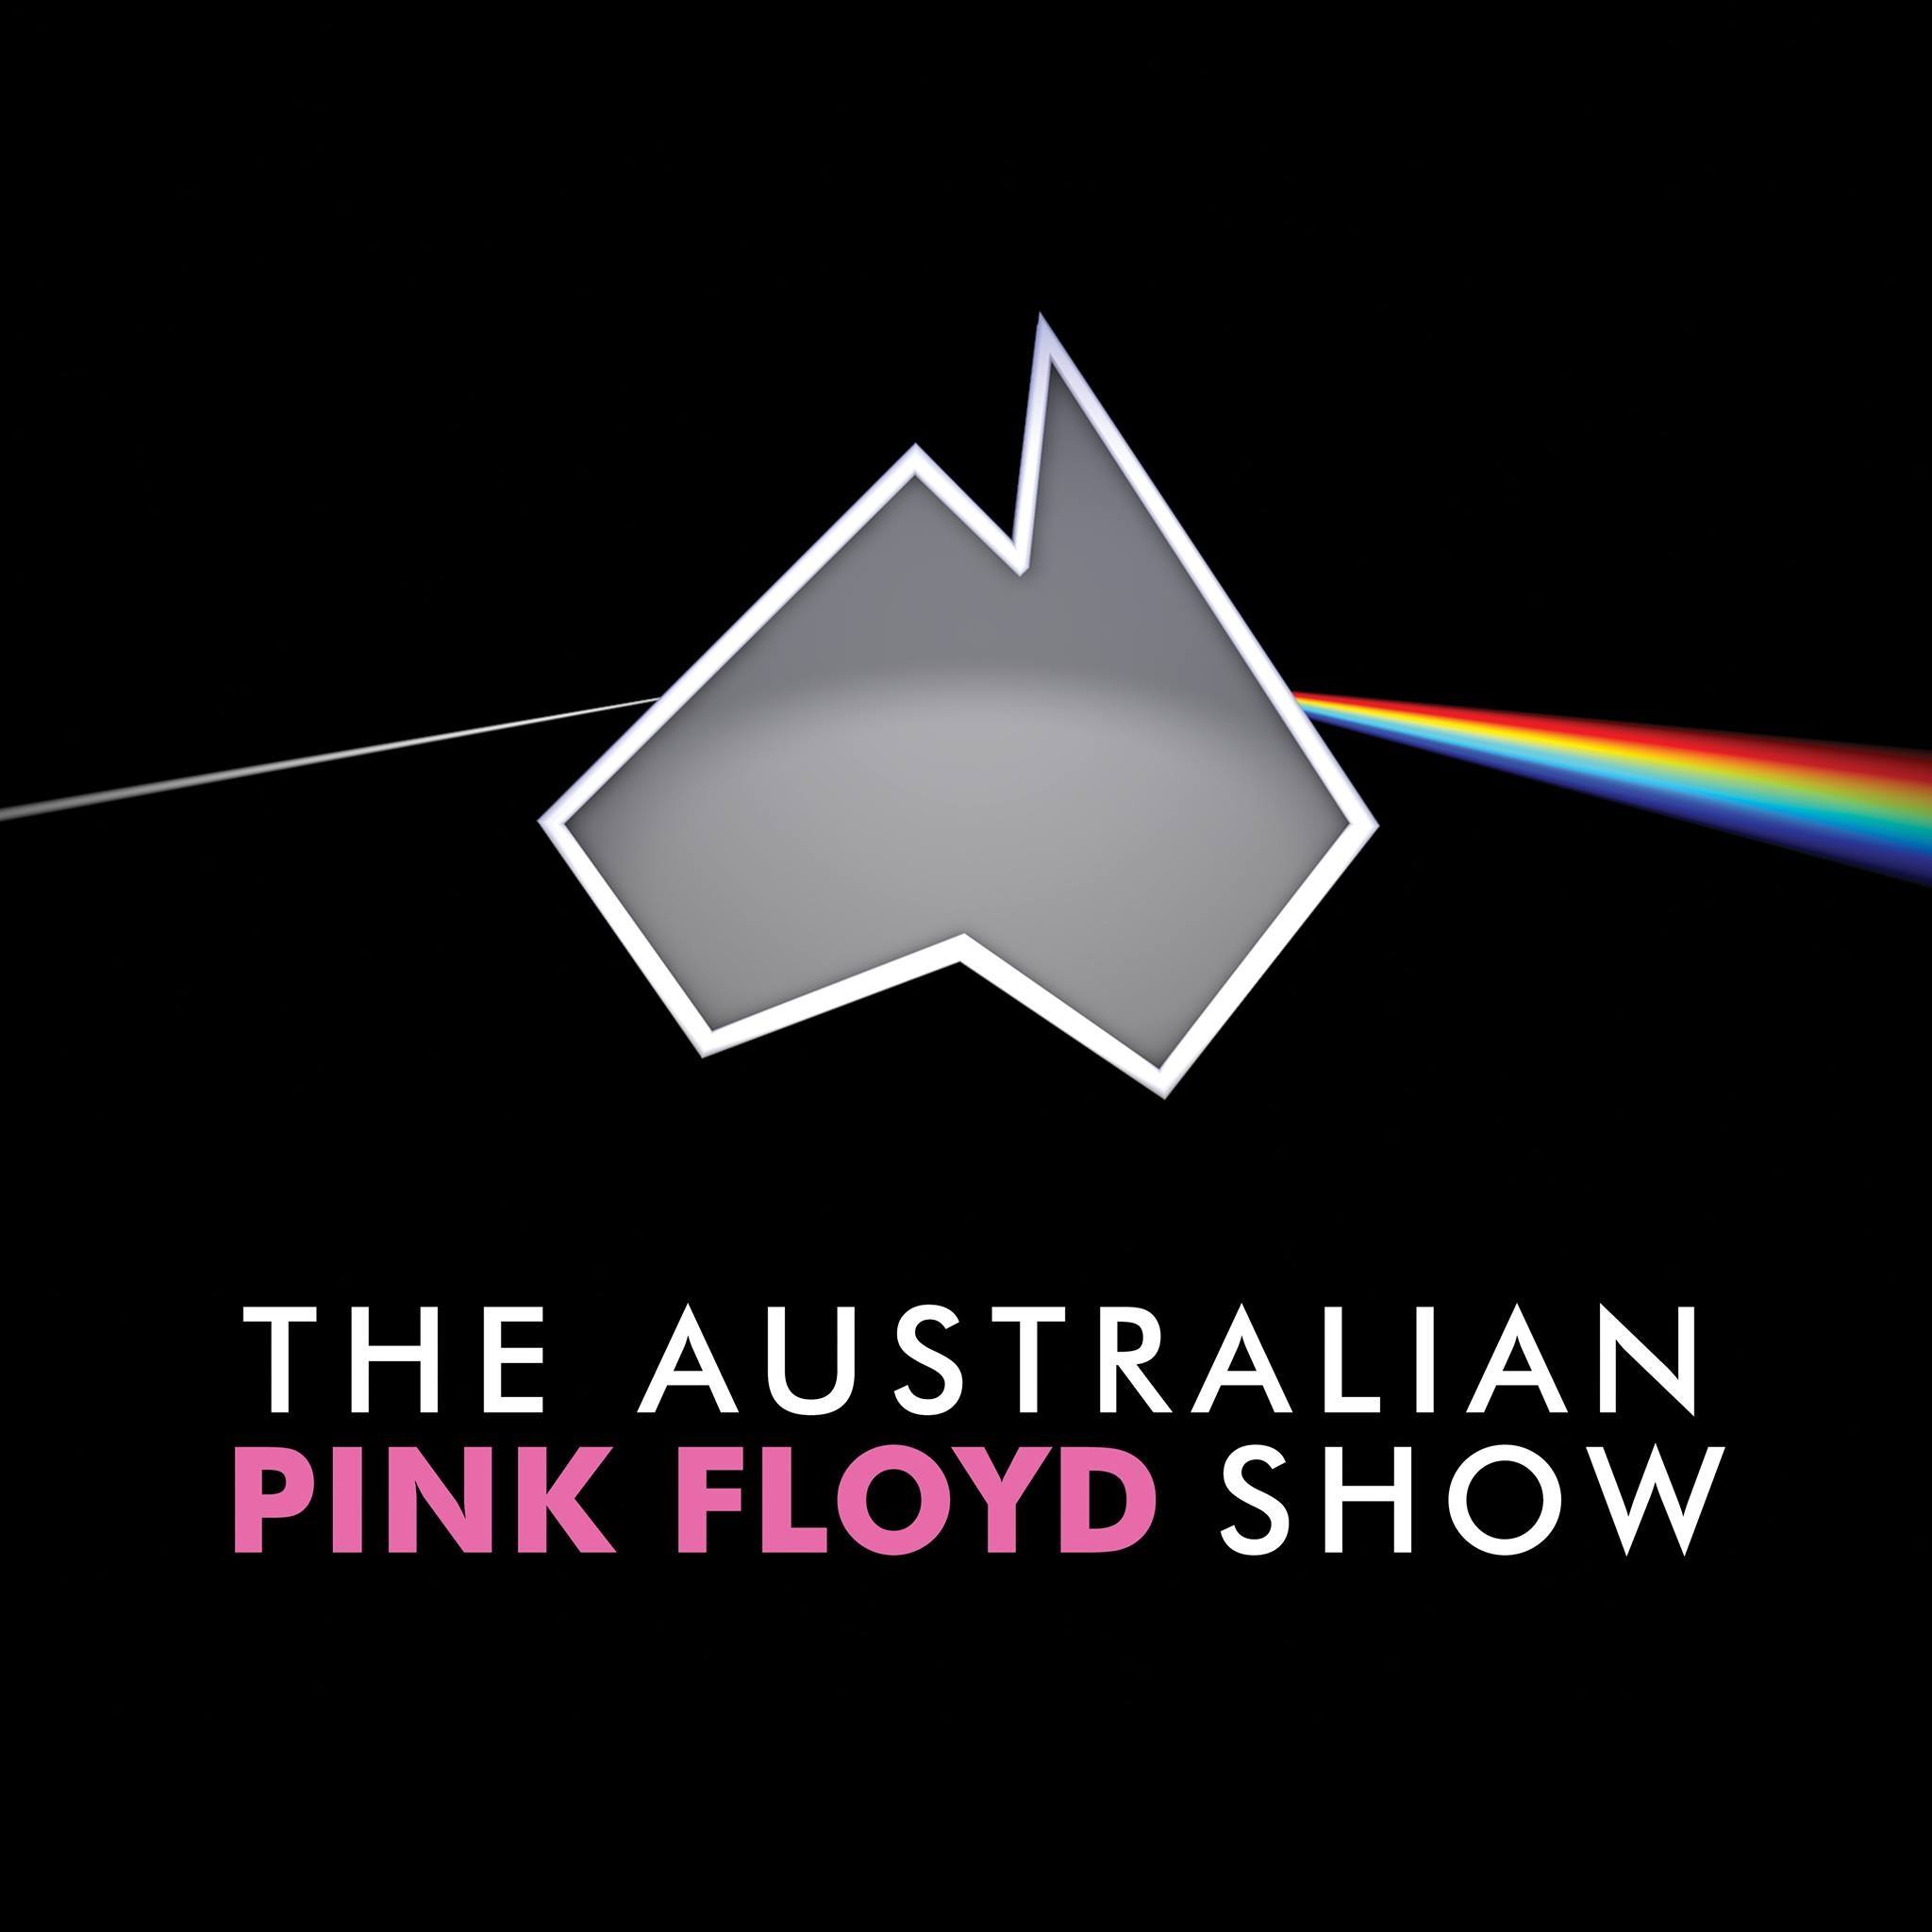 Billets The Australian Pink Floyd Show (Bonus Arena Hull - Hull)